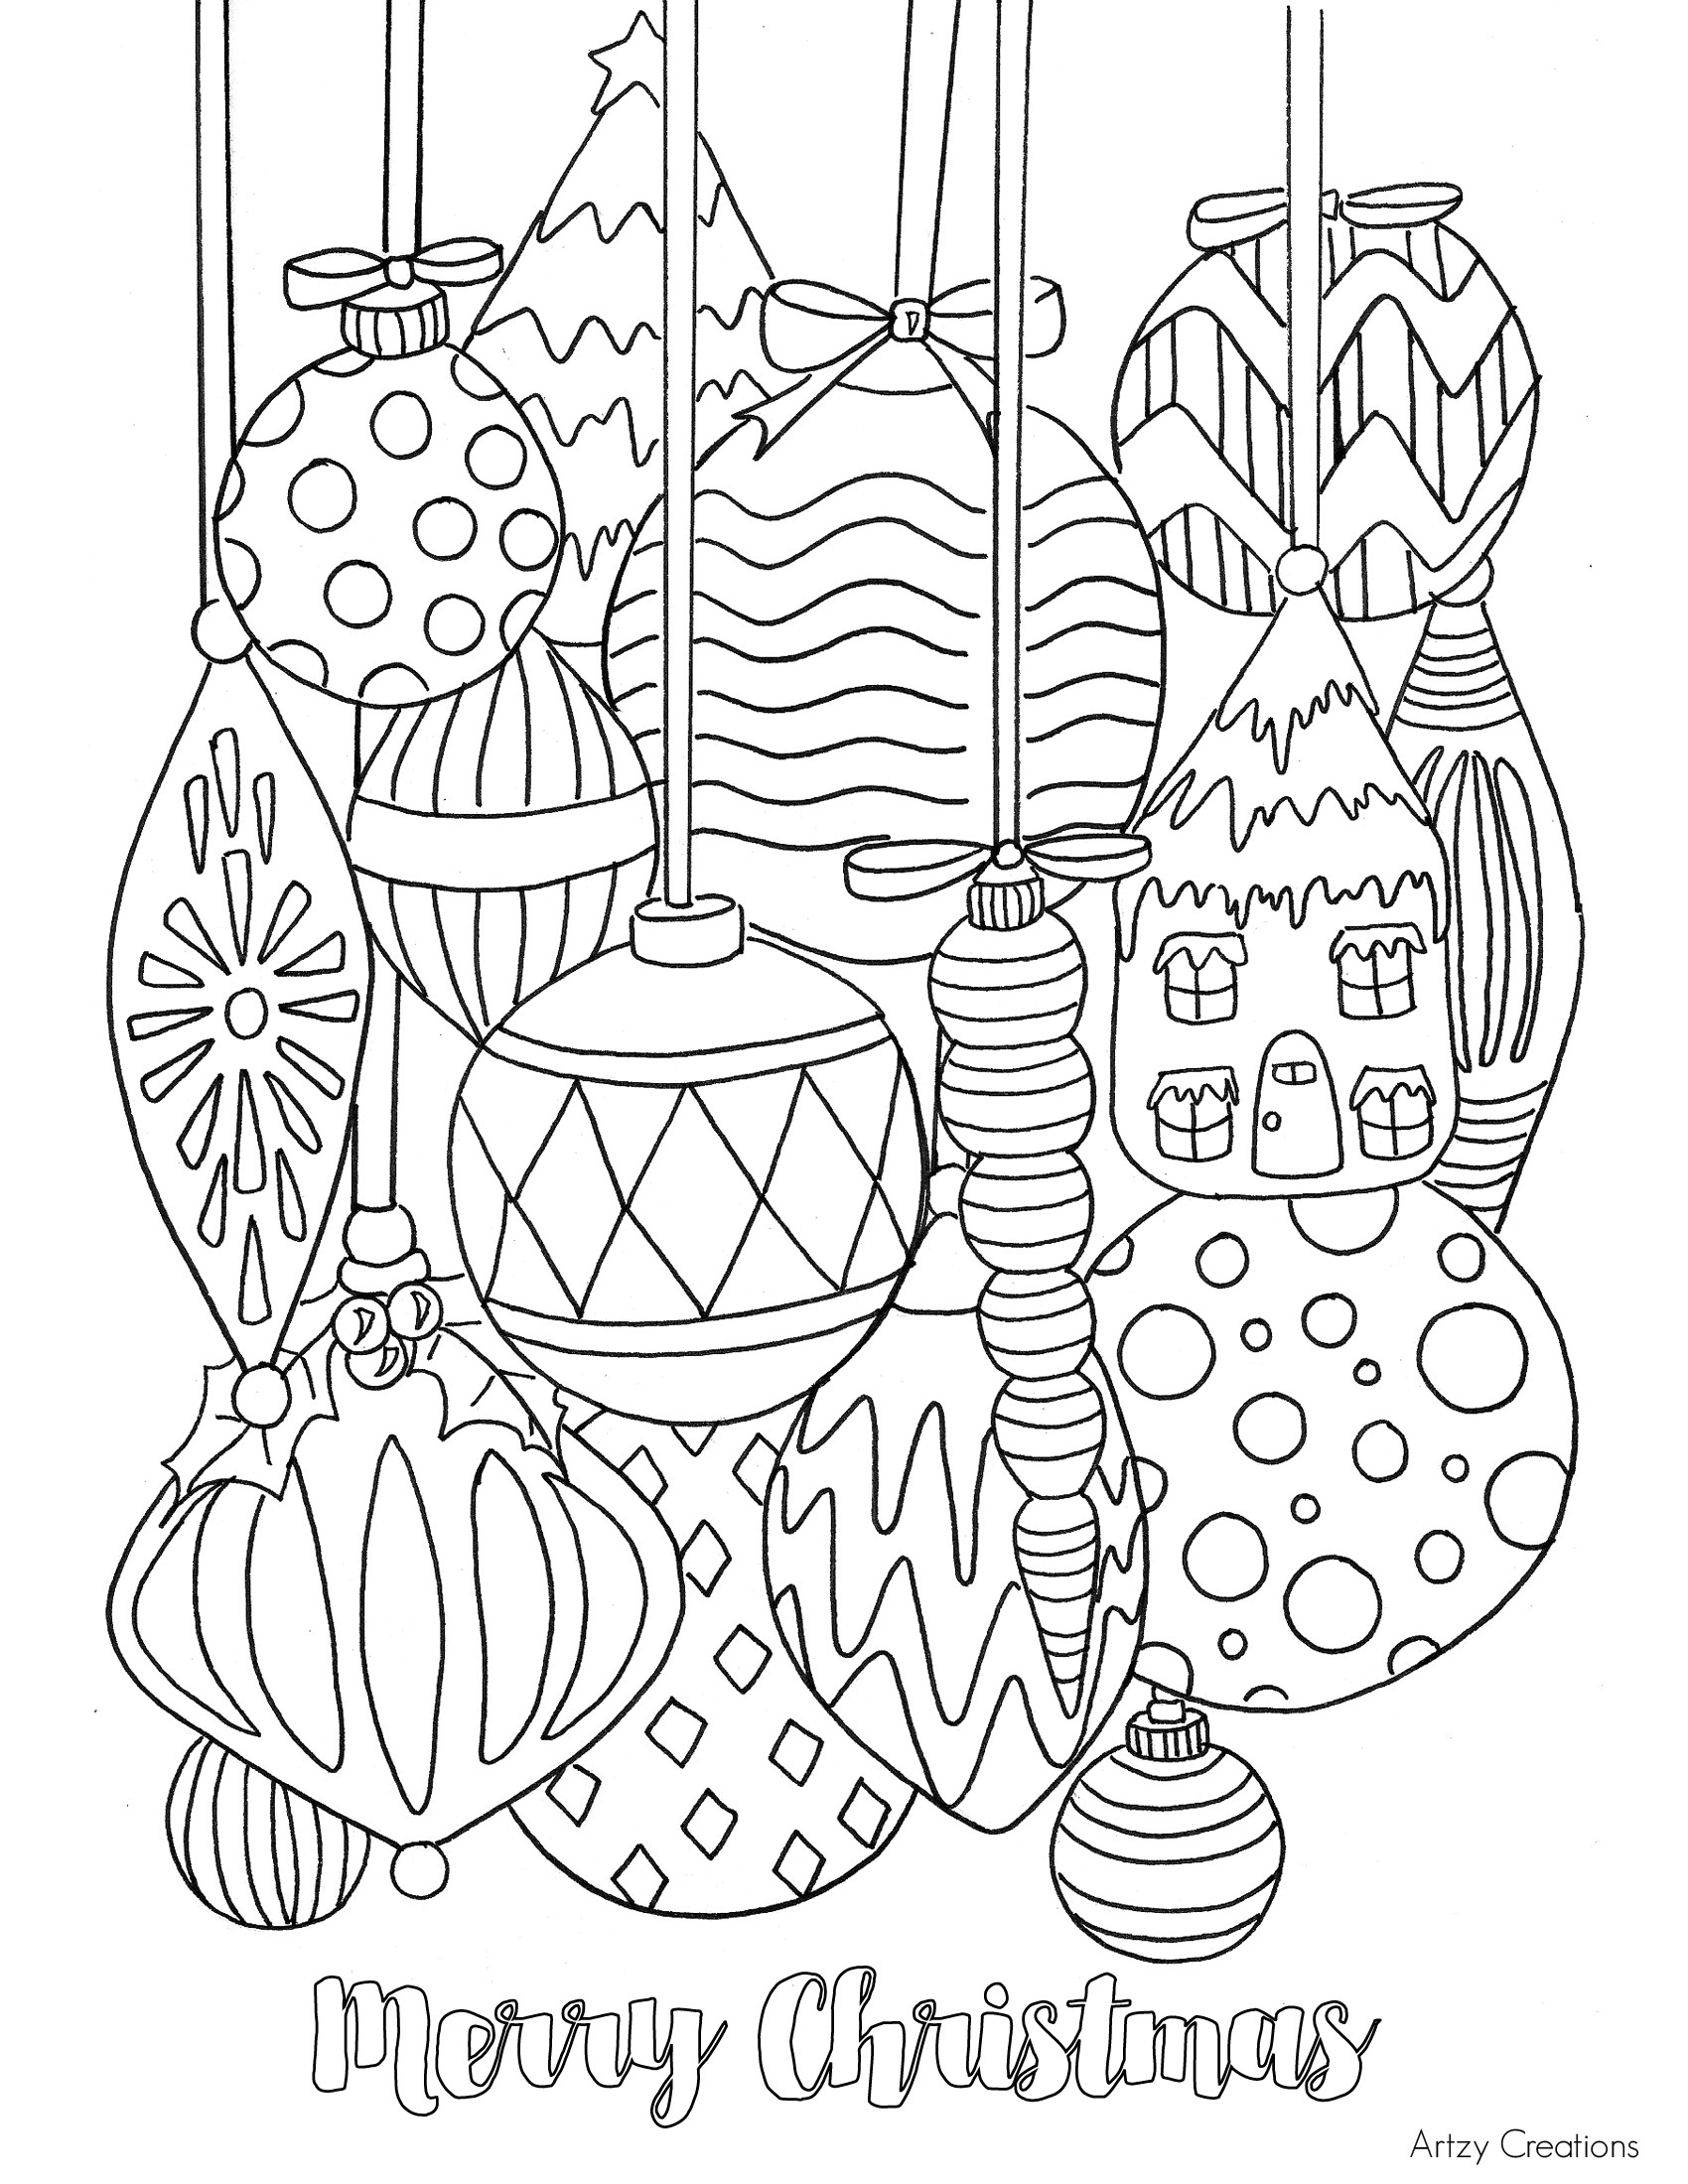 Free Printable Christmas Coloring Sheets
 Free Christmas Ornament Coloring Page TGIF This